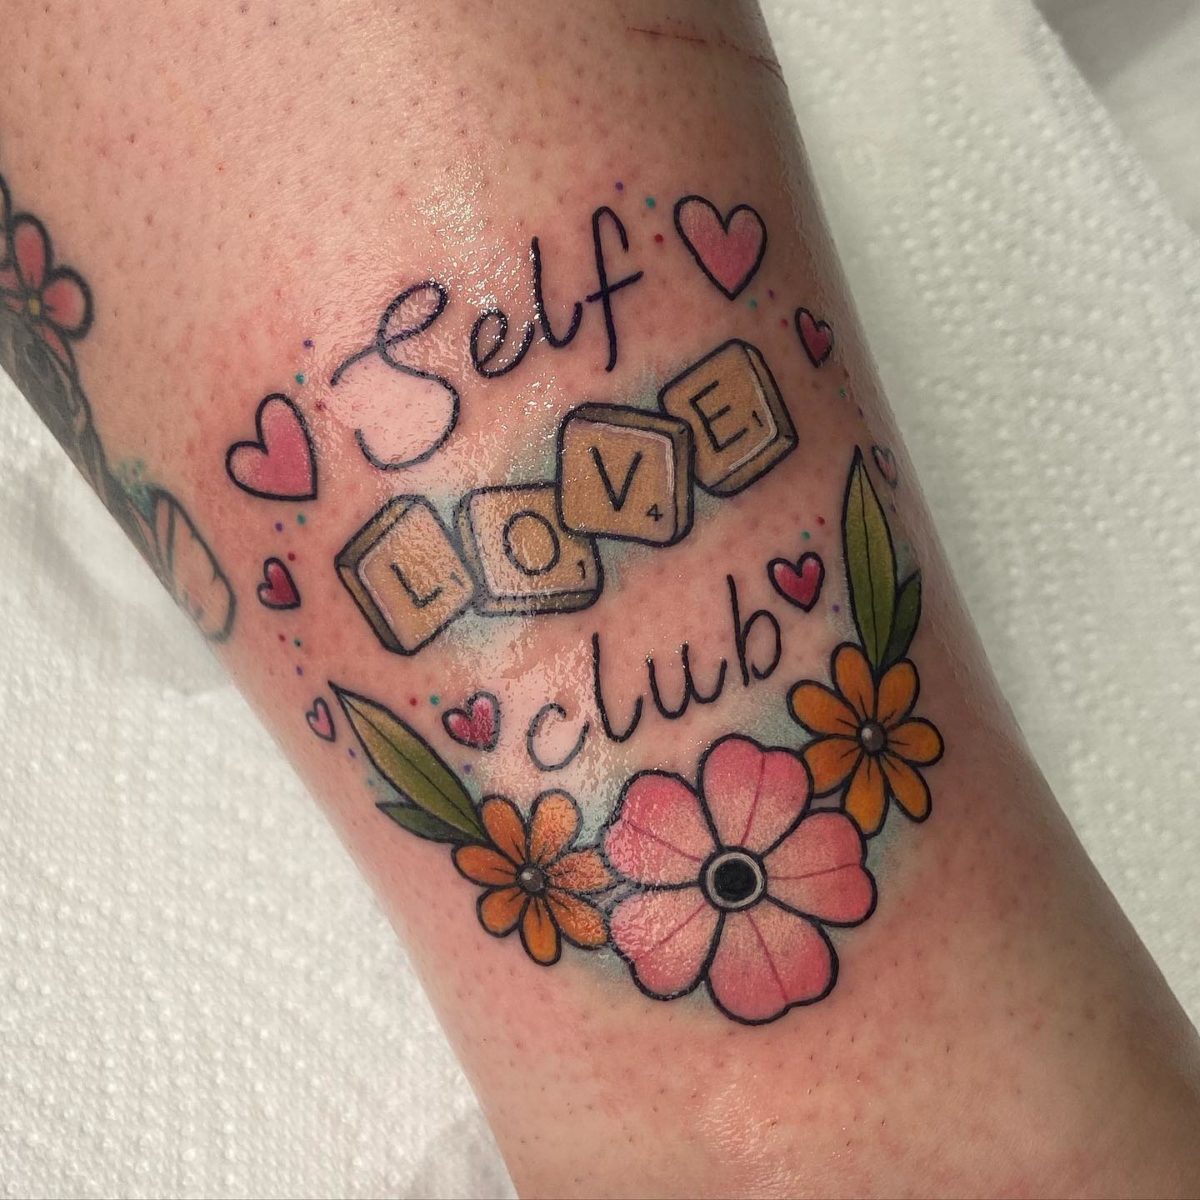 self-love tattoos